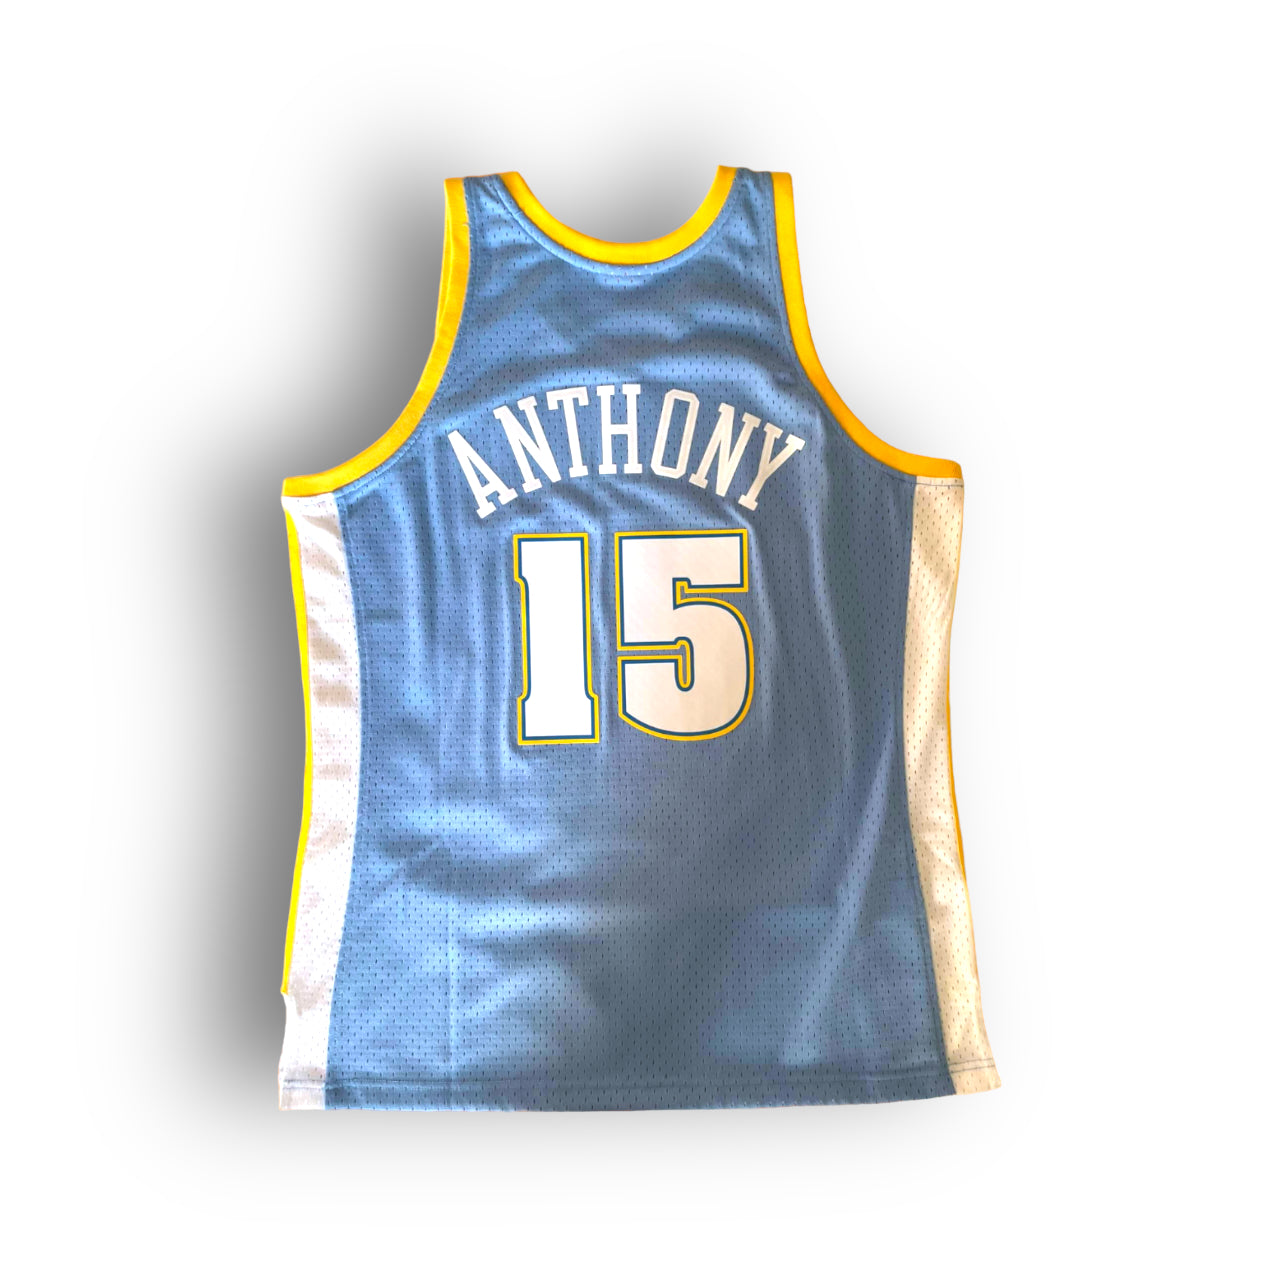 Carmelo Anthony 2006-2007 Denver Nuggets Away Mitchell & Ness Swingman Jersey - Blue - Hoop Jersey Store